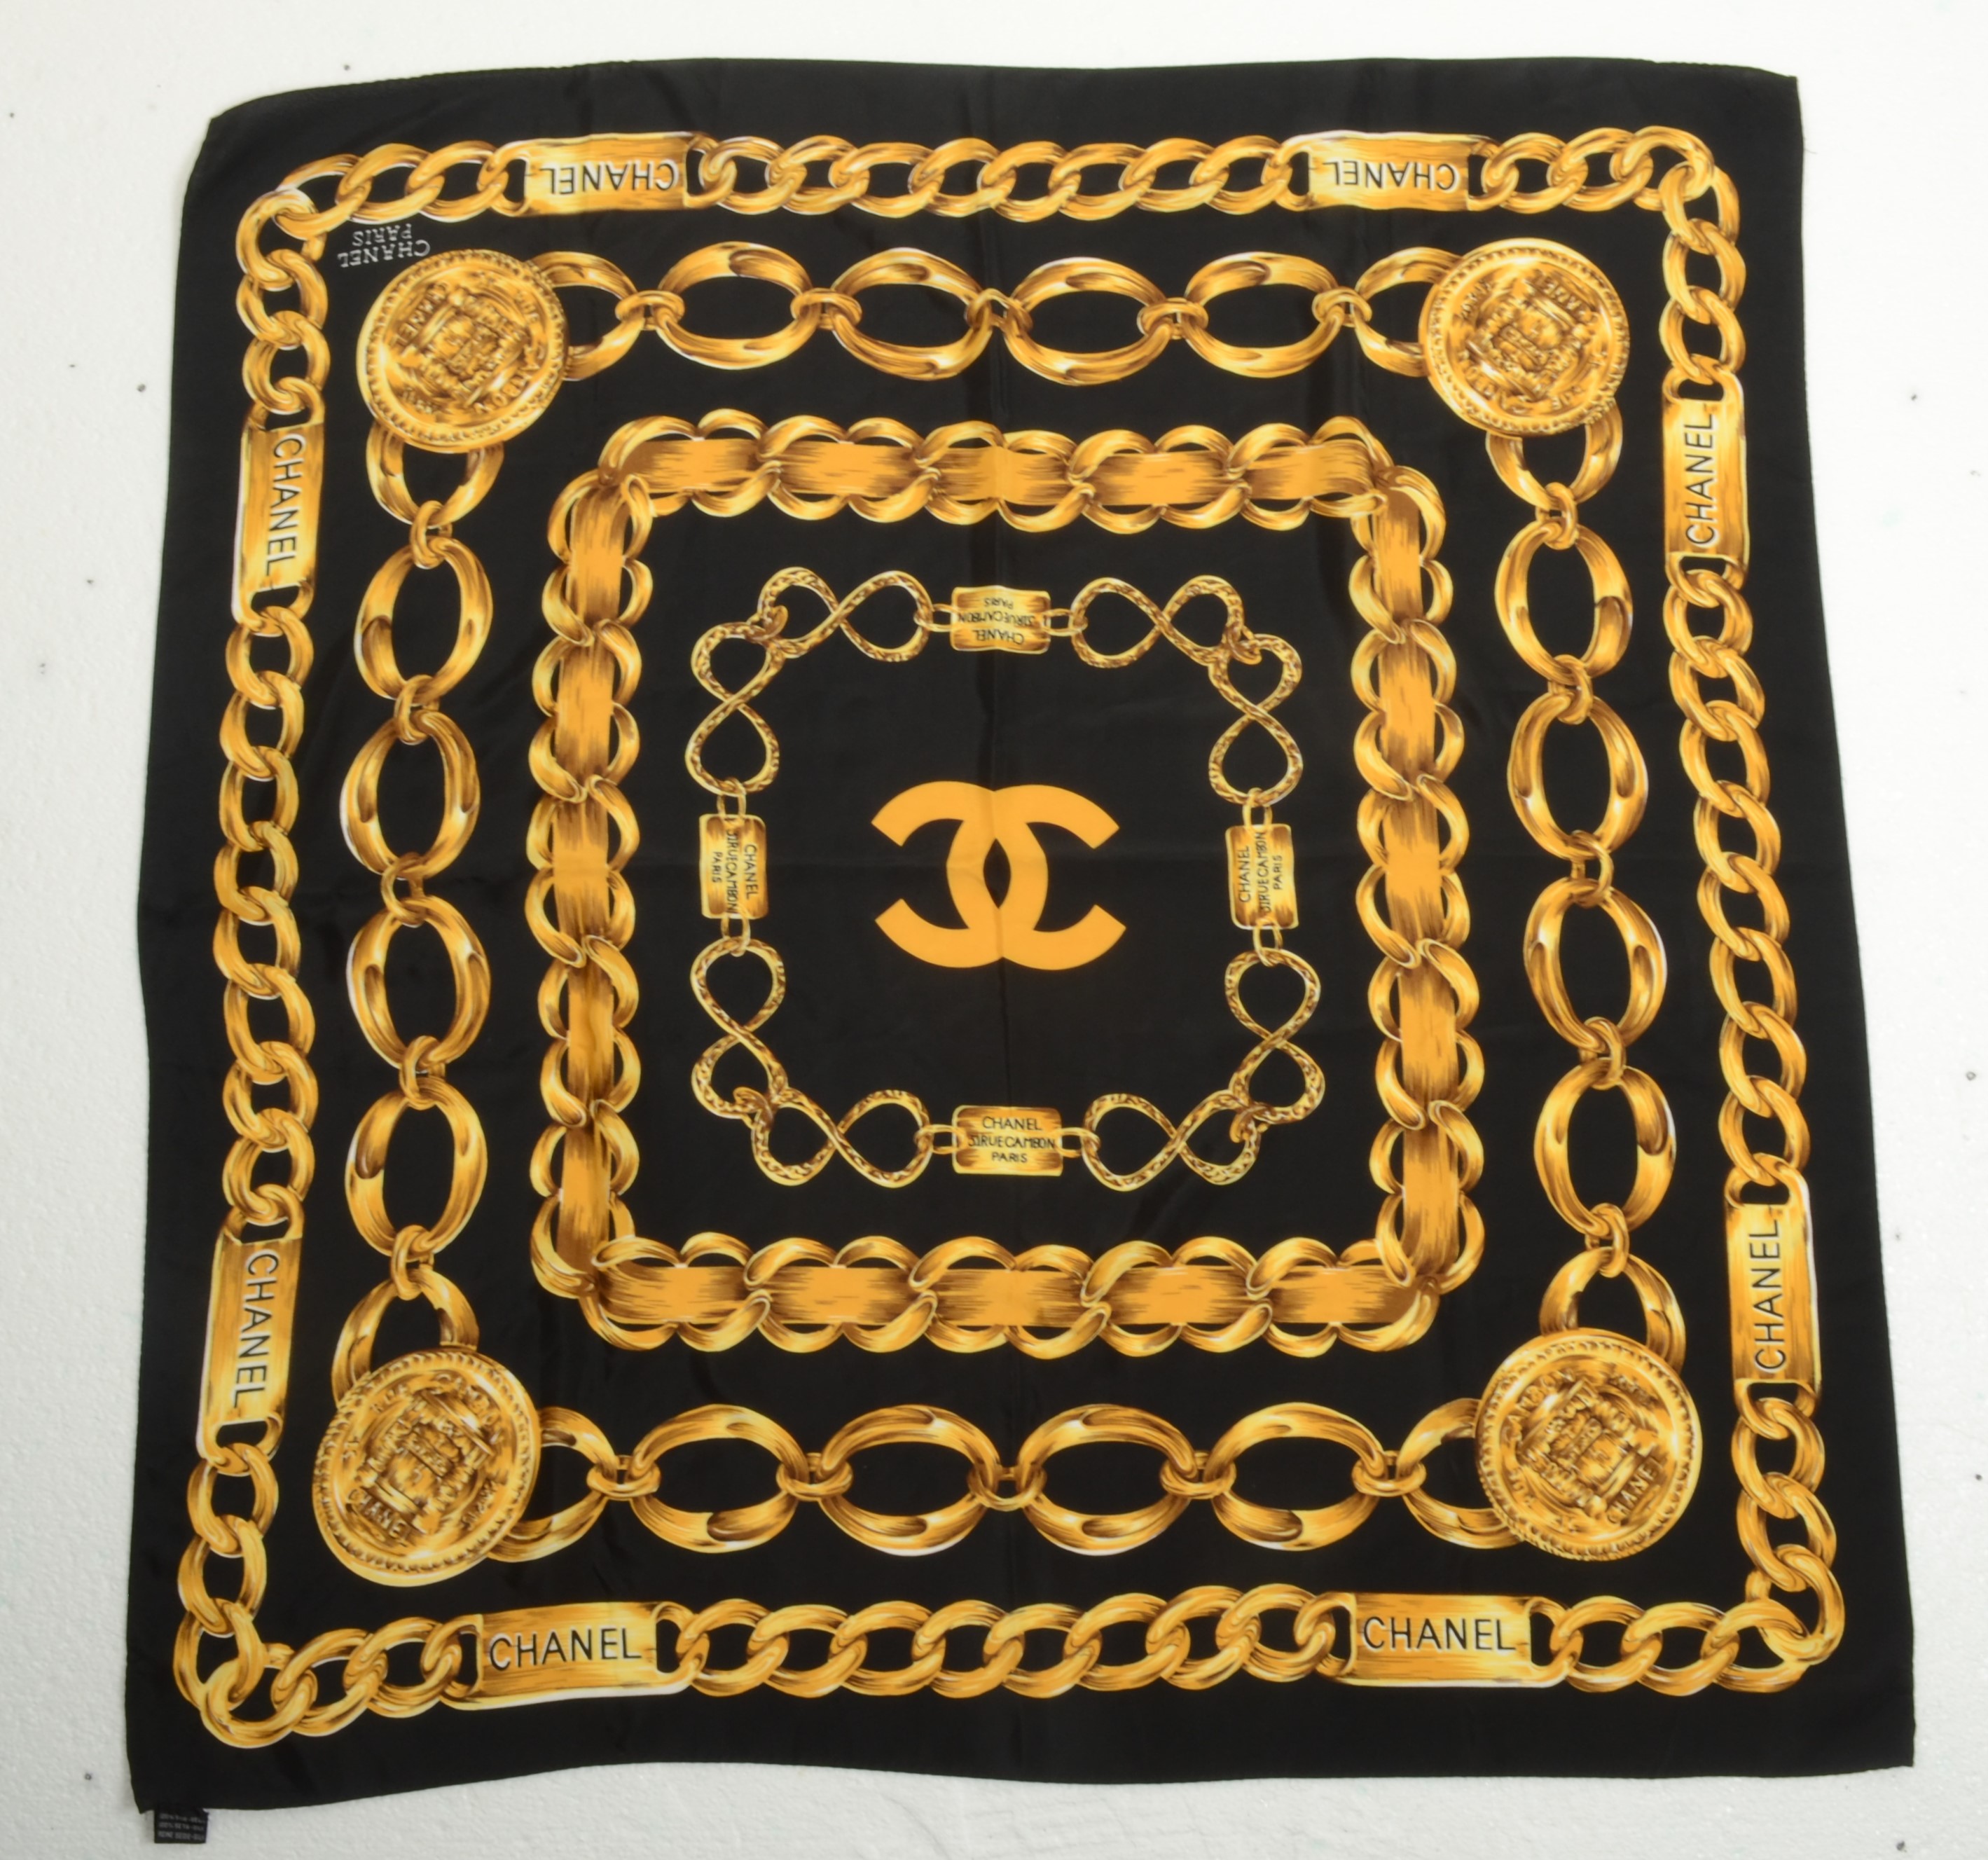 A Chanel silk scarf, black with gold chain link design, 85cm x 85cm.